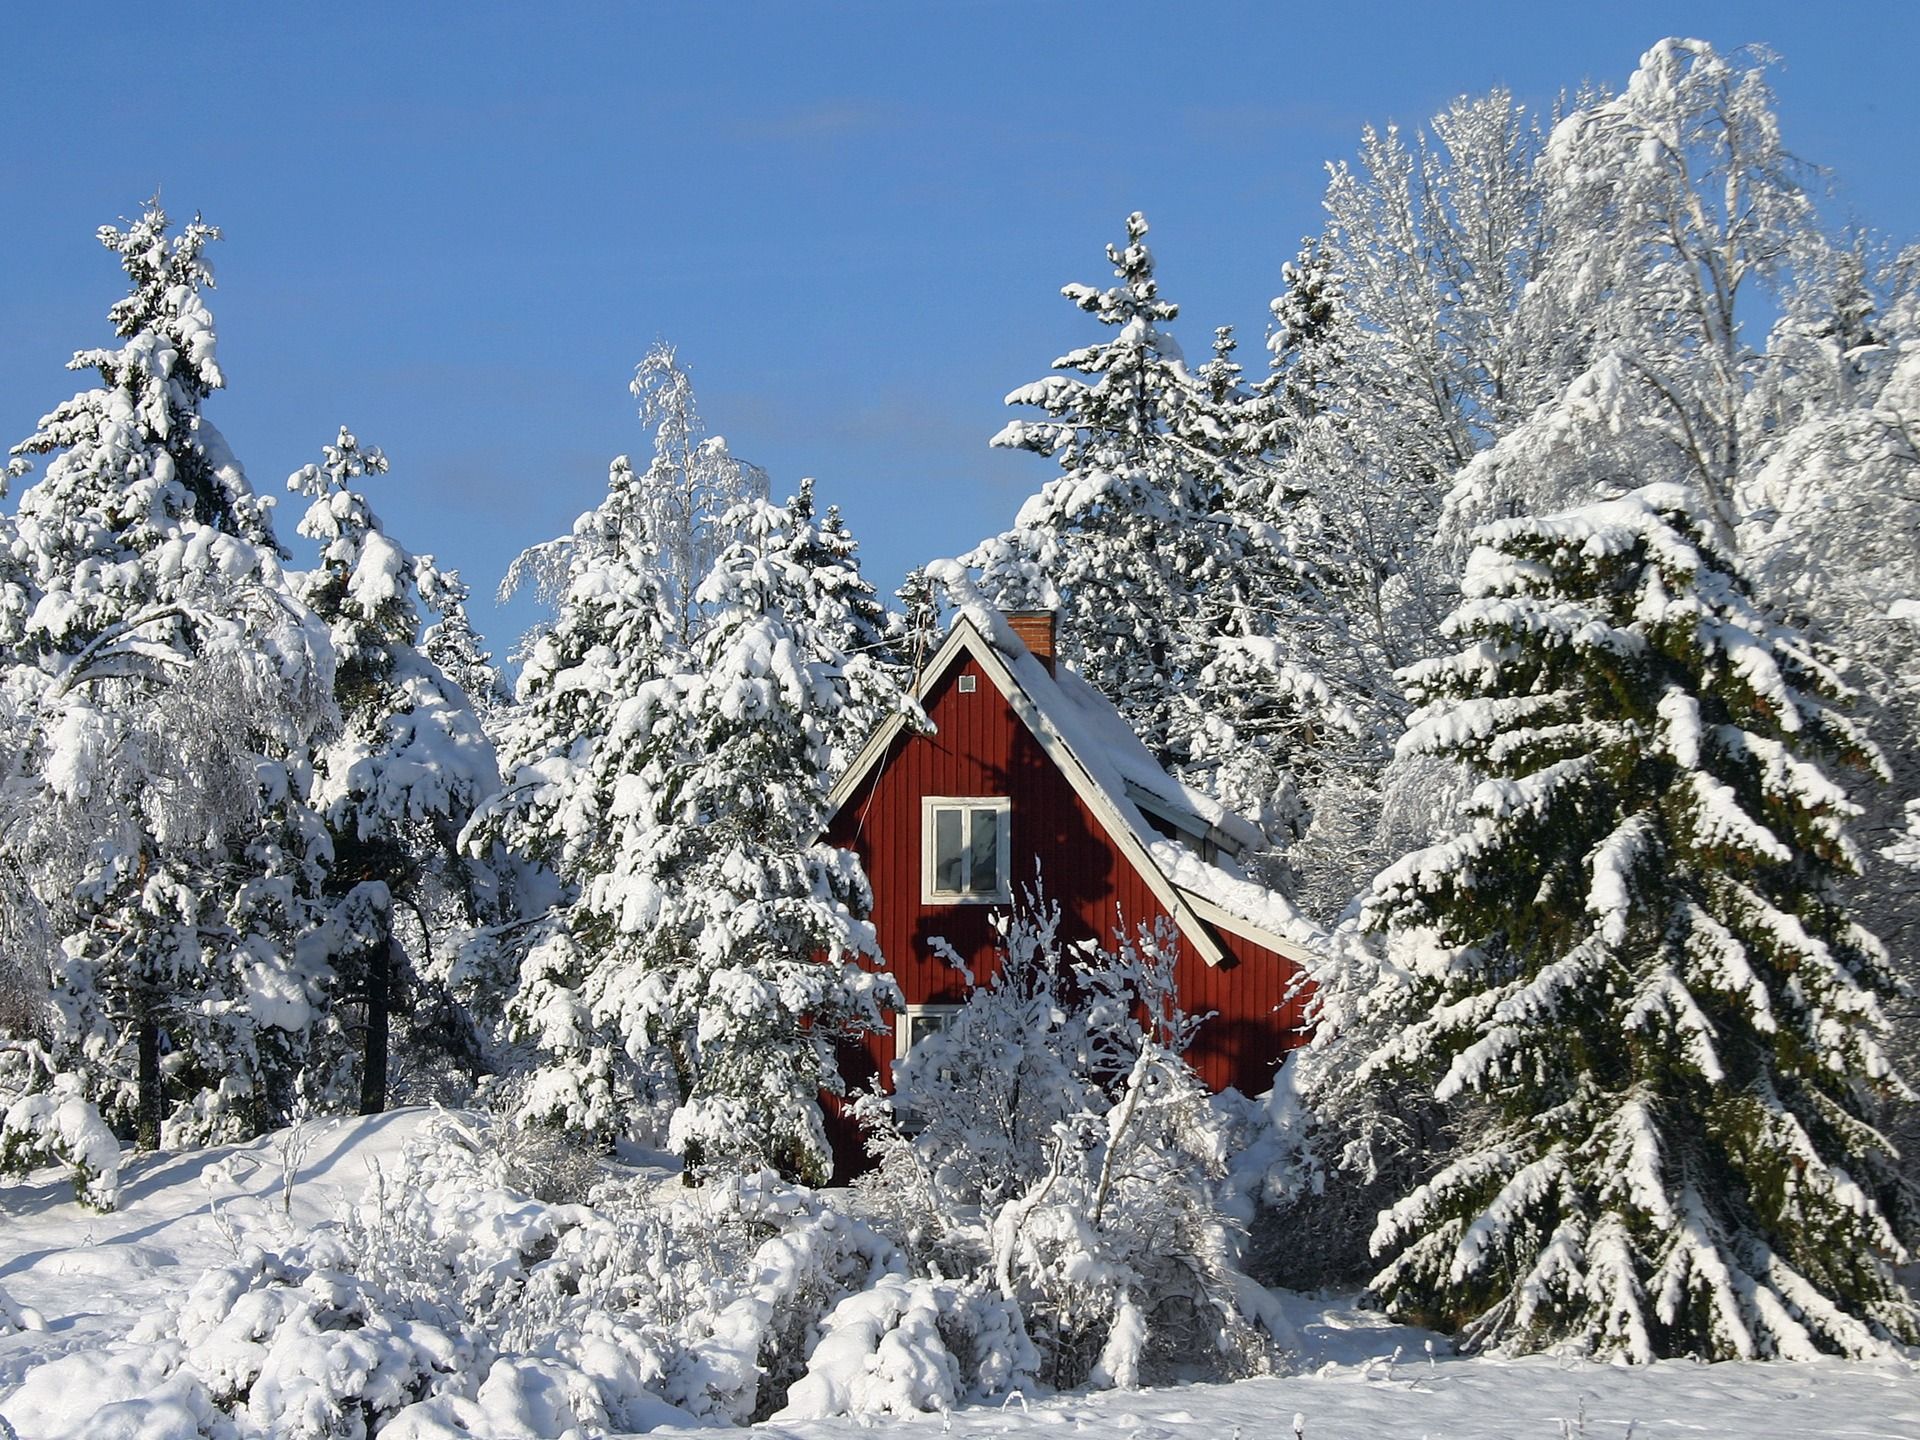 Winter in Sweden Wallpaper Winter Nature Wallpaper in jpg format for free download